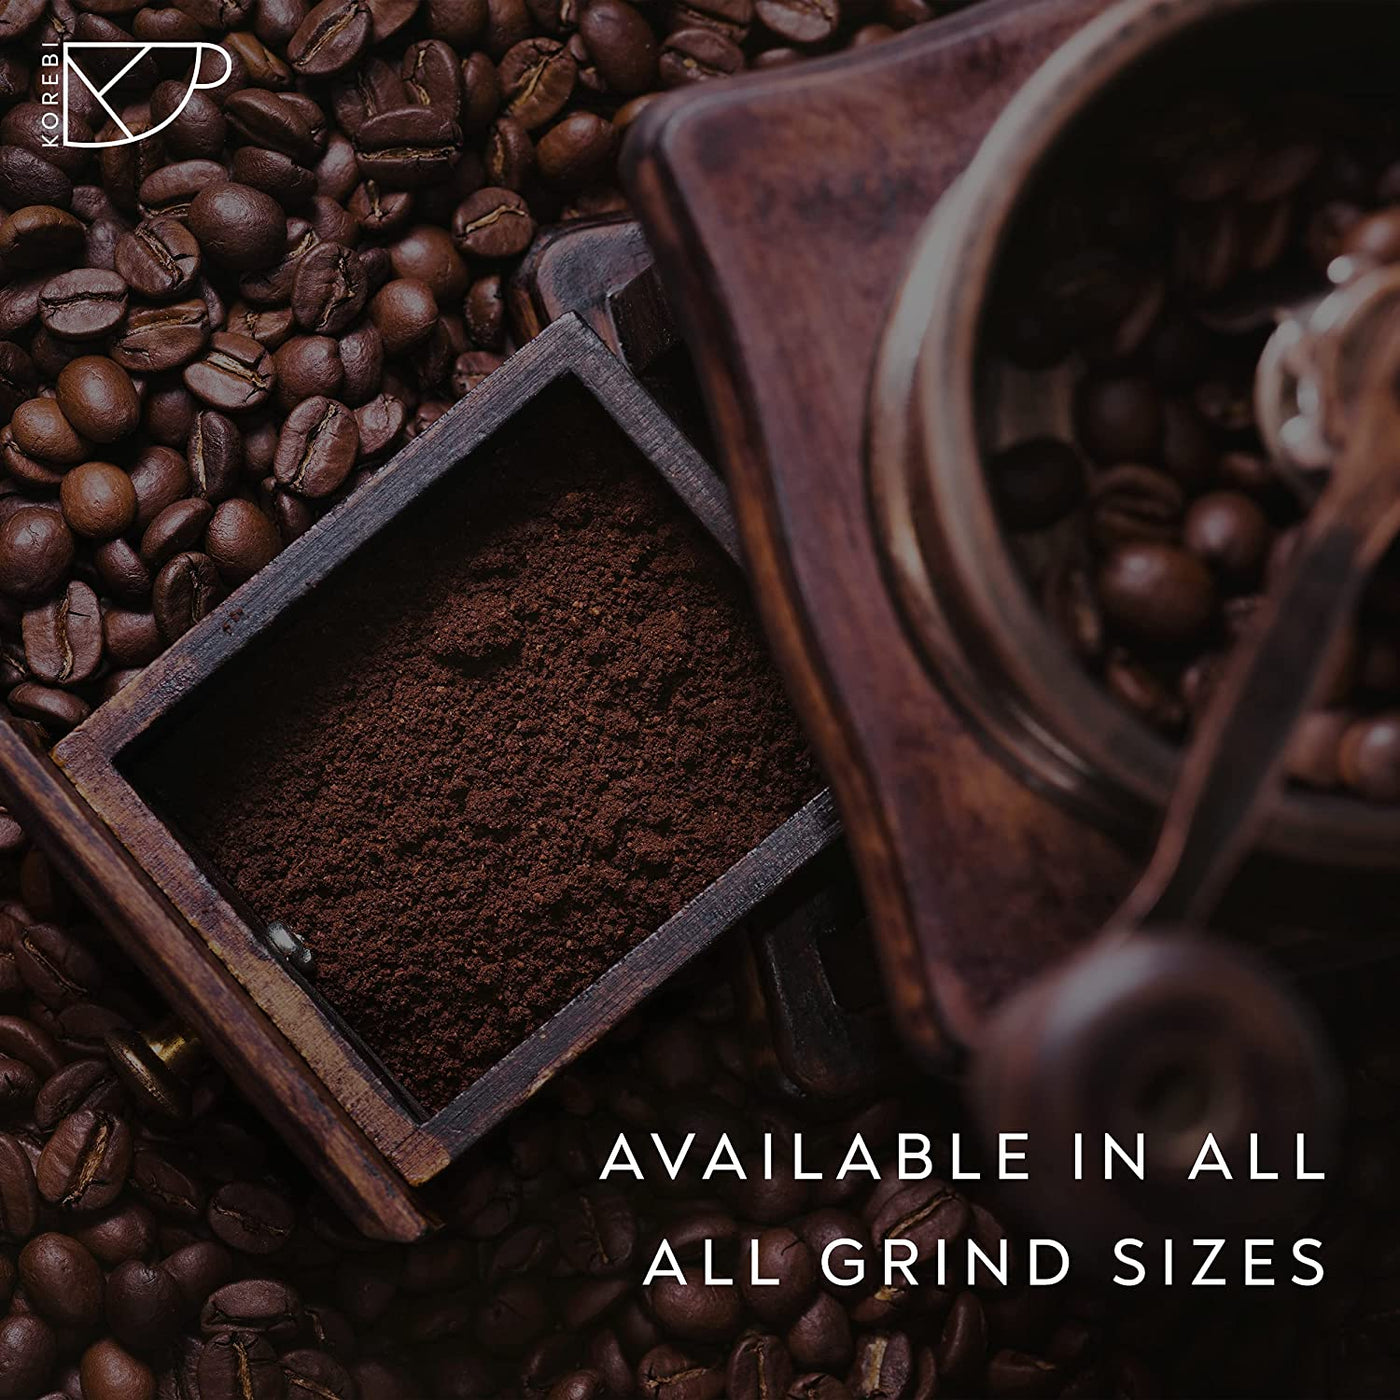 Wabi Coffee | Medium Dark Roast with Earthy and Mulberry Notes